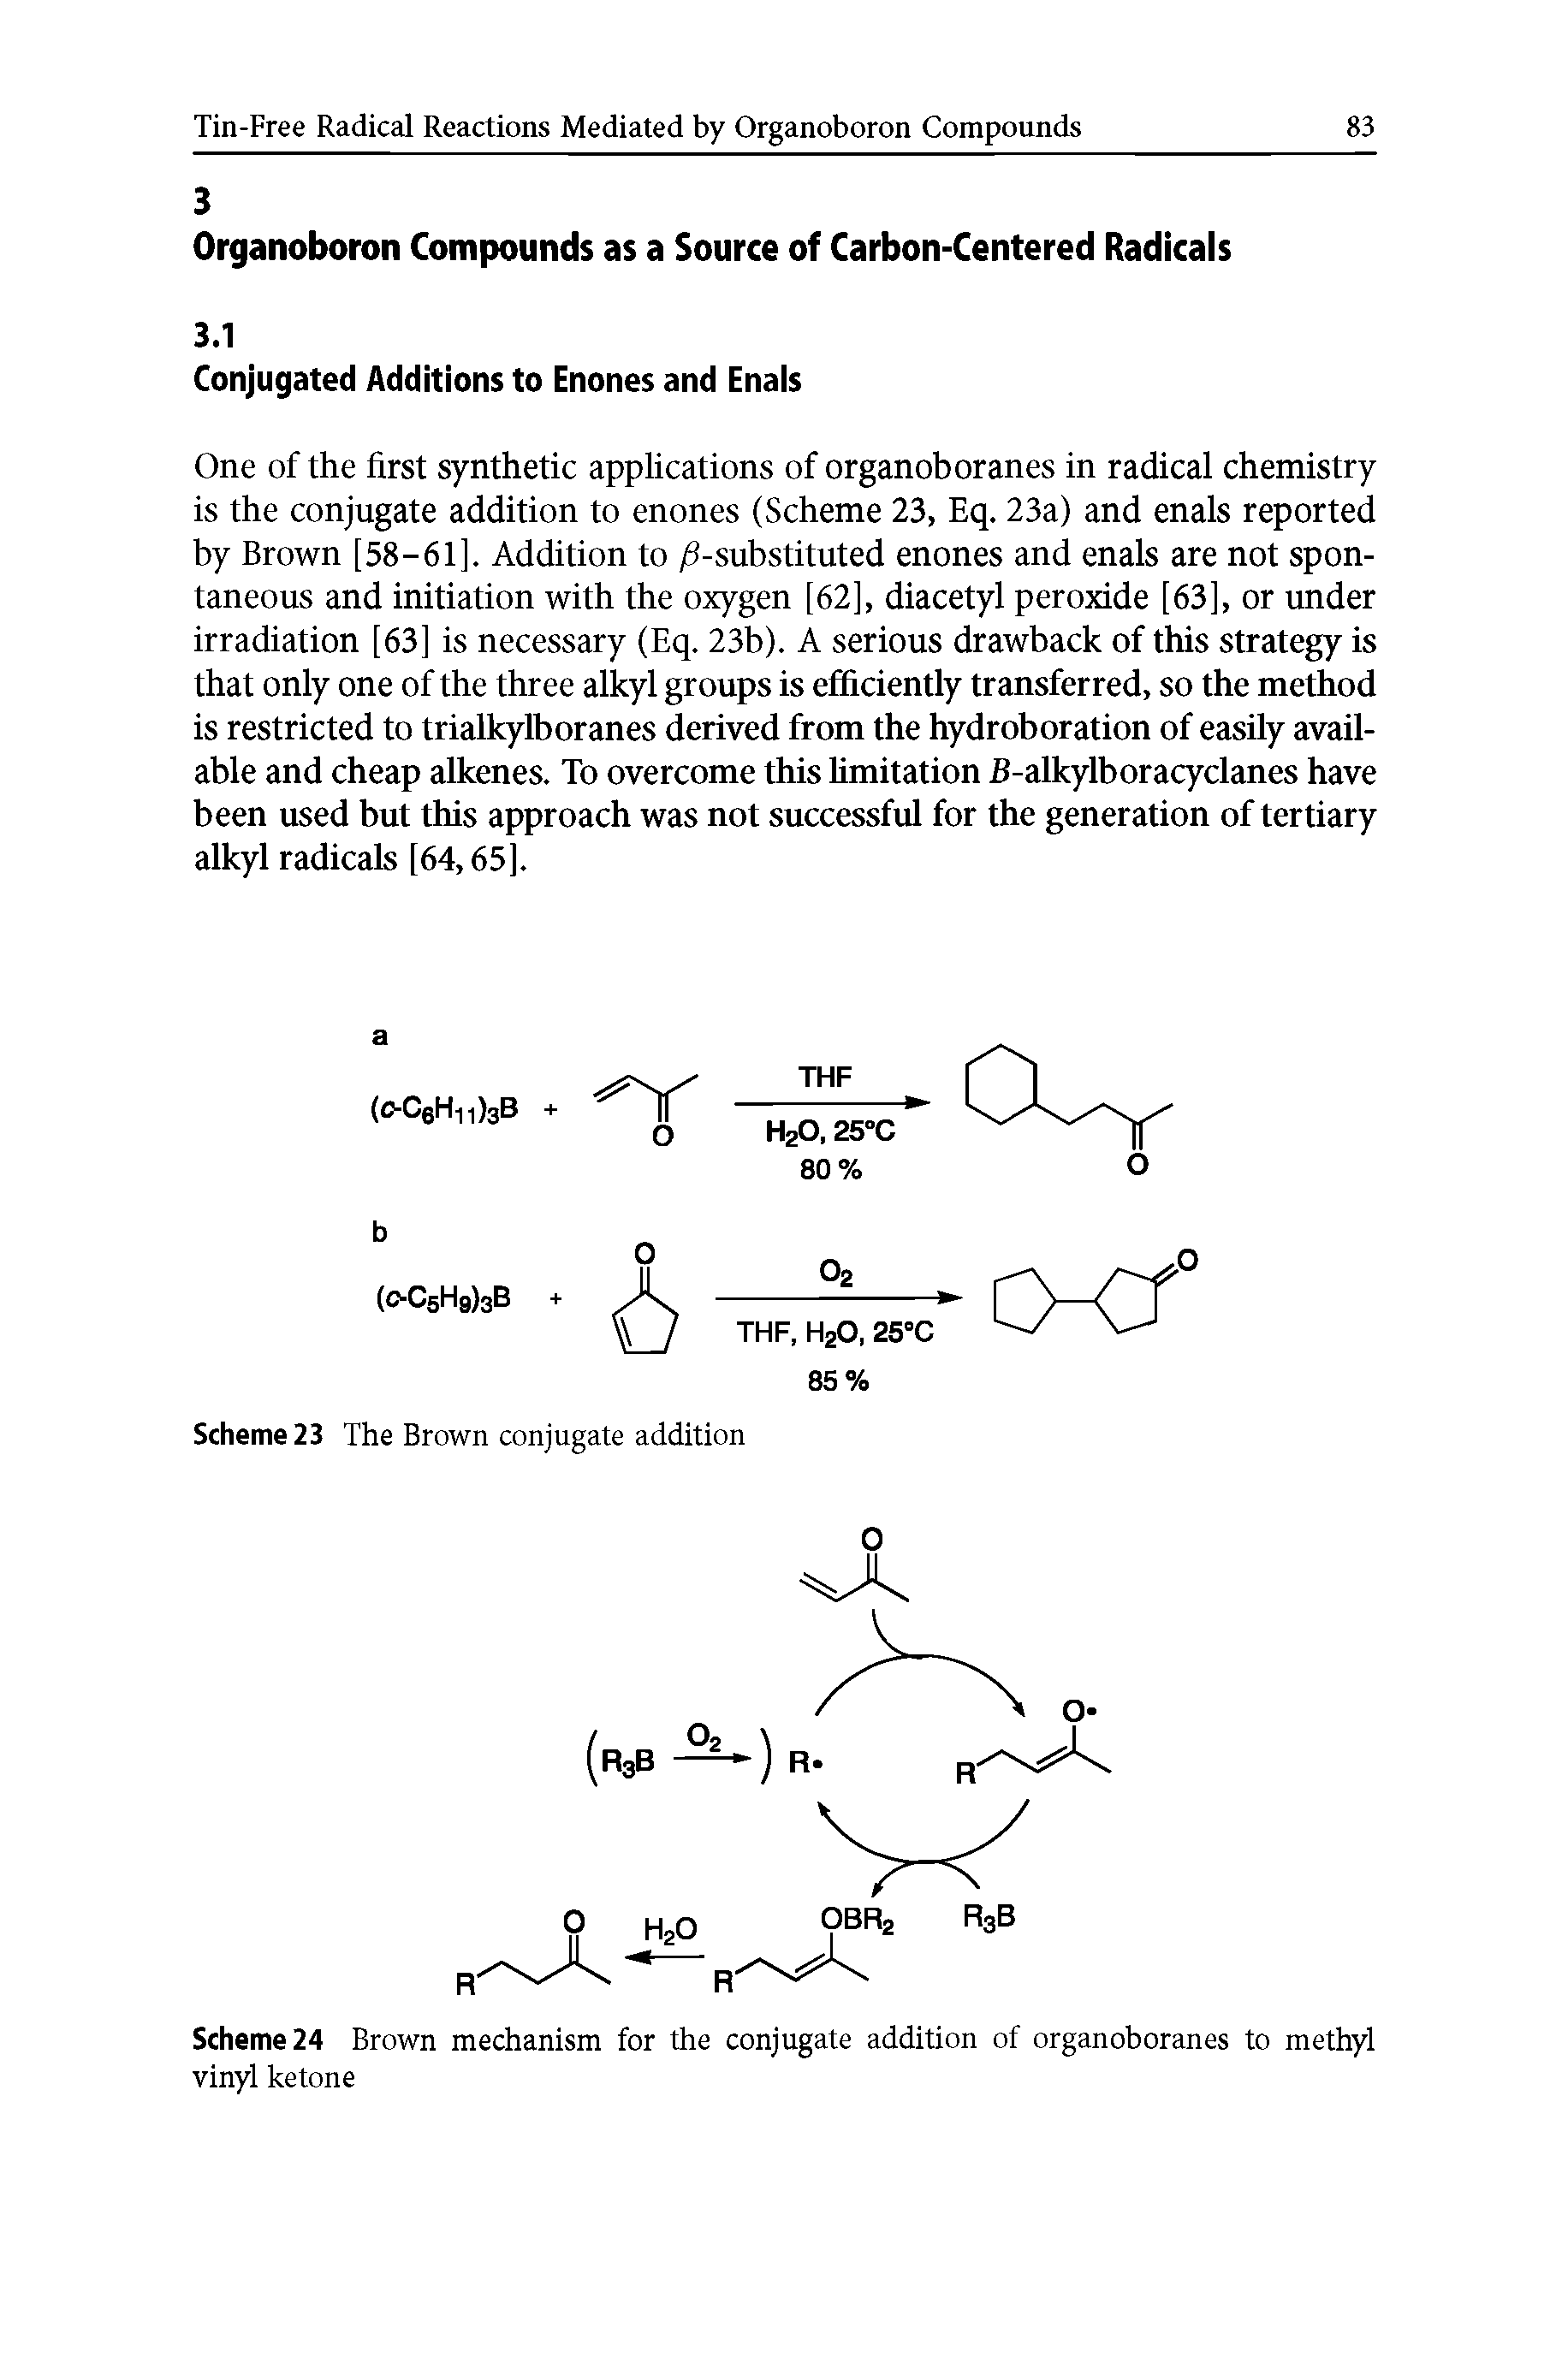 Scheme 24 Brown mechanism for the conjugate addition of organoboranes to methyl vinyl ketone...